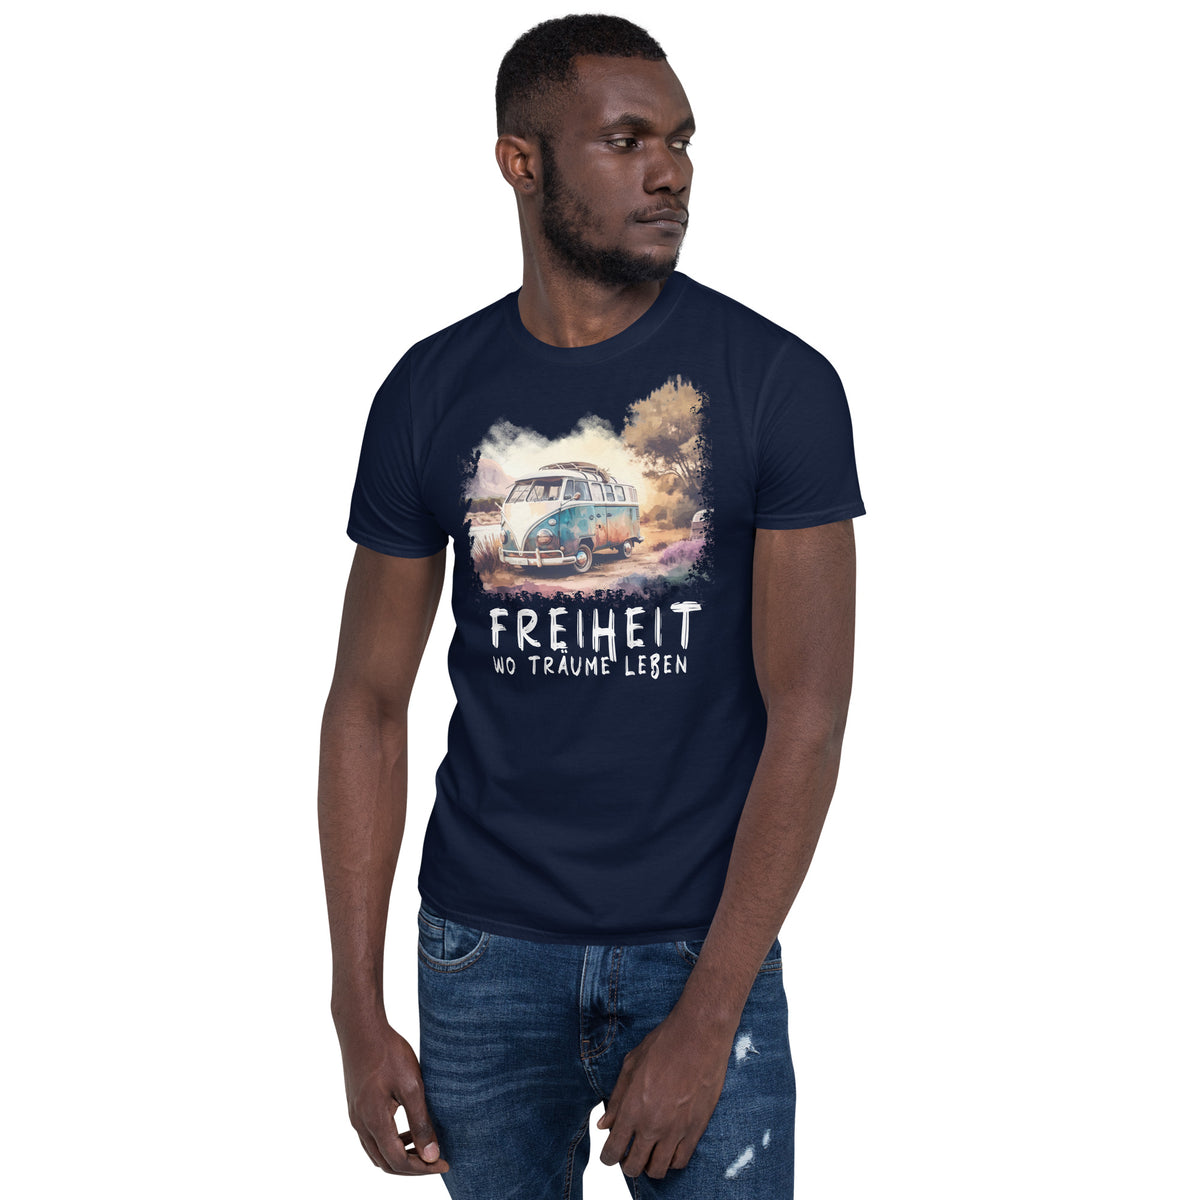 T-Shirt Van-Life Motiv “Freiheit wo Träume leben” Variante 3